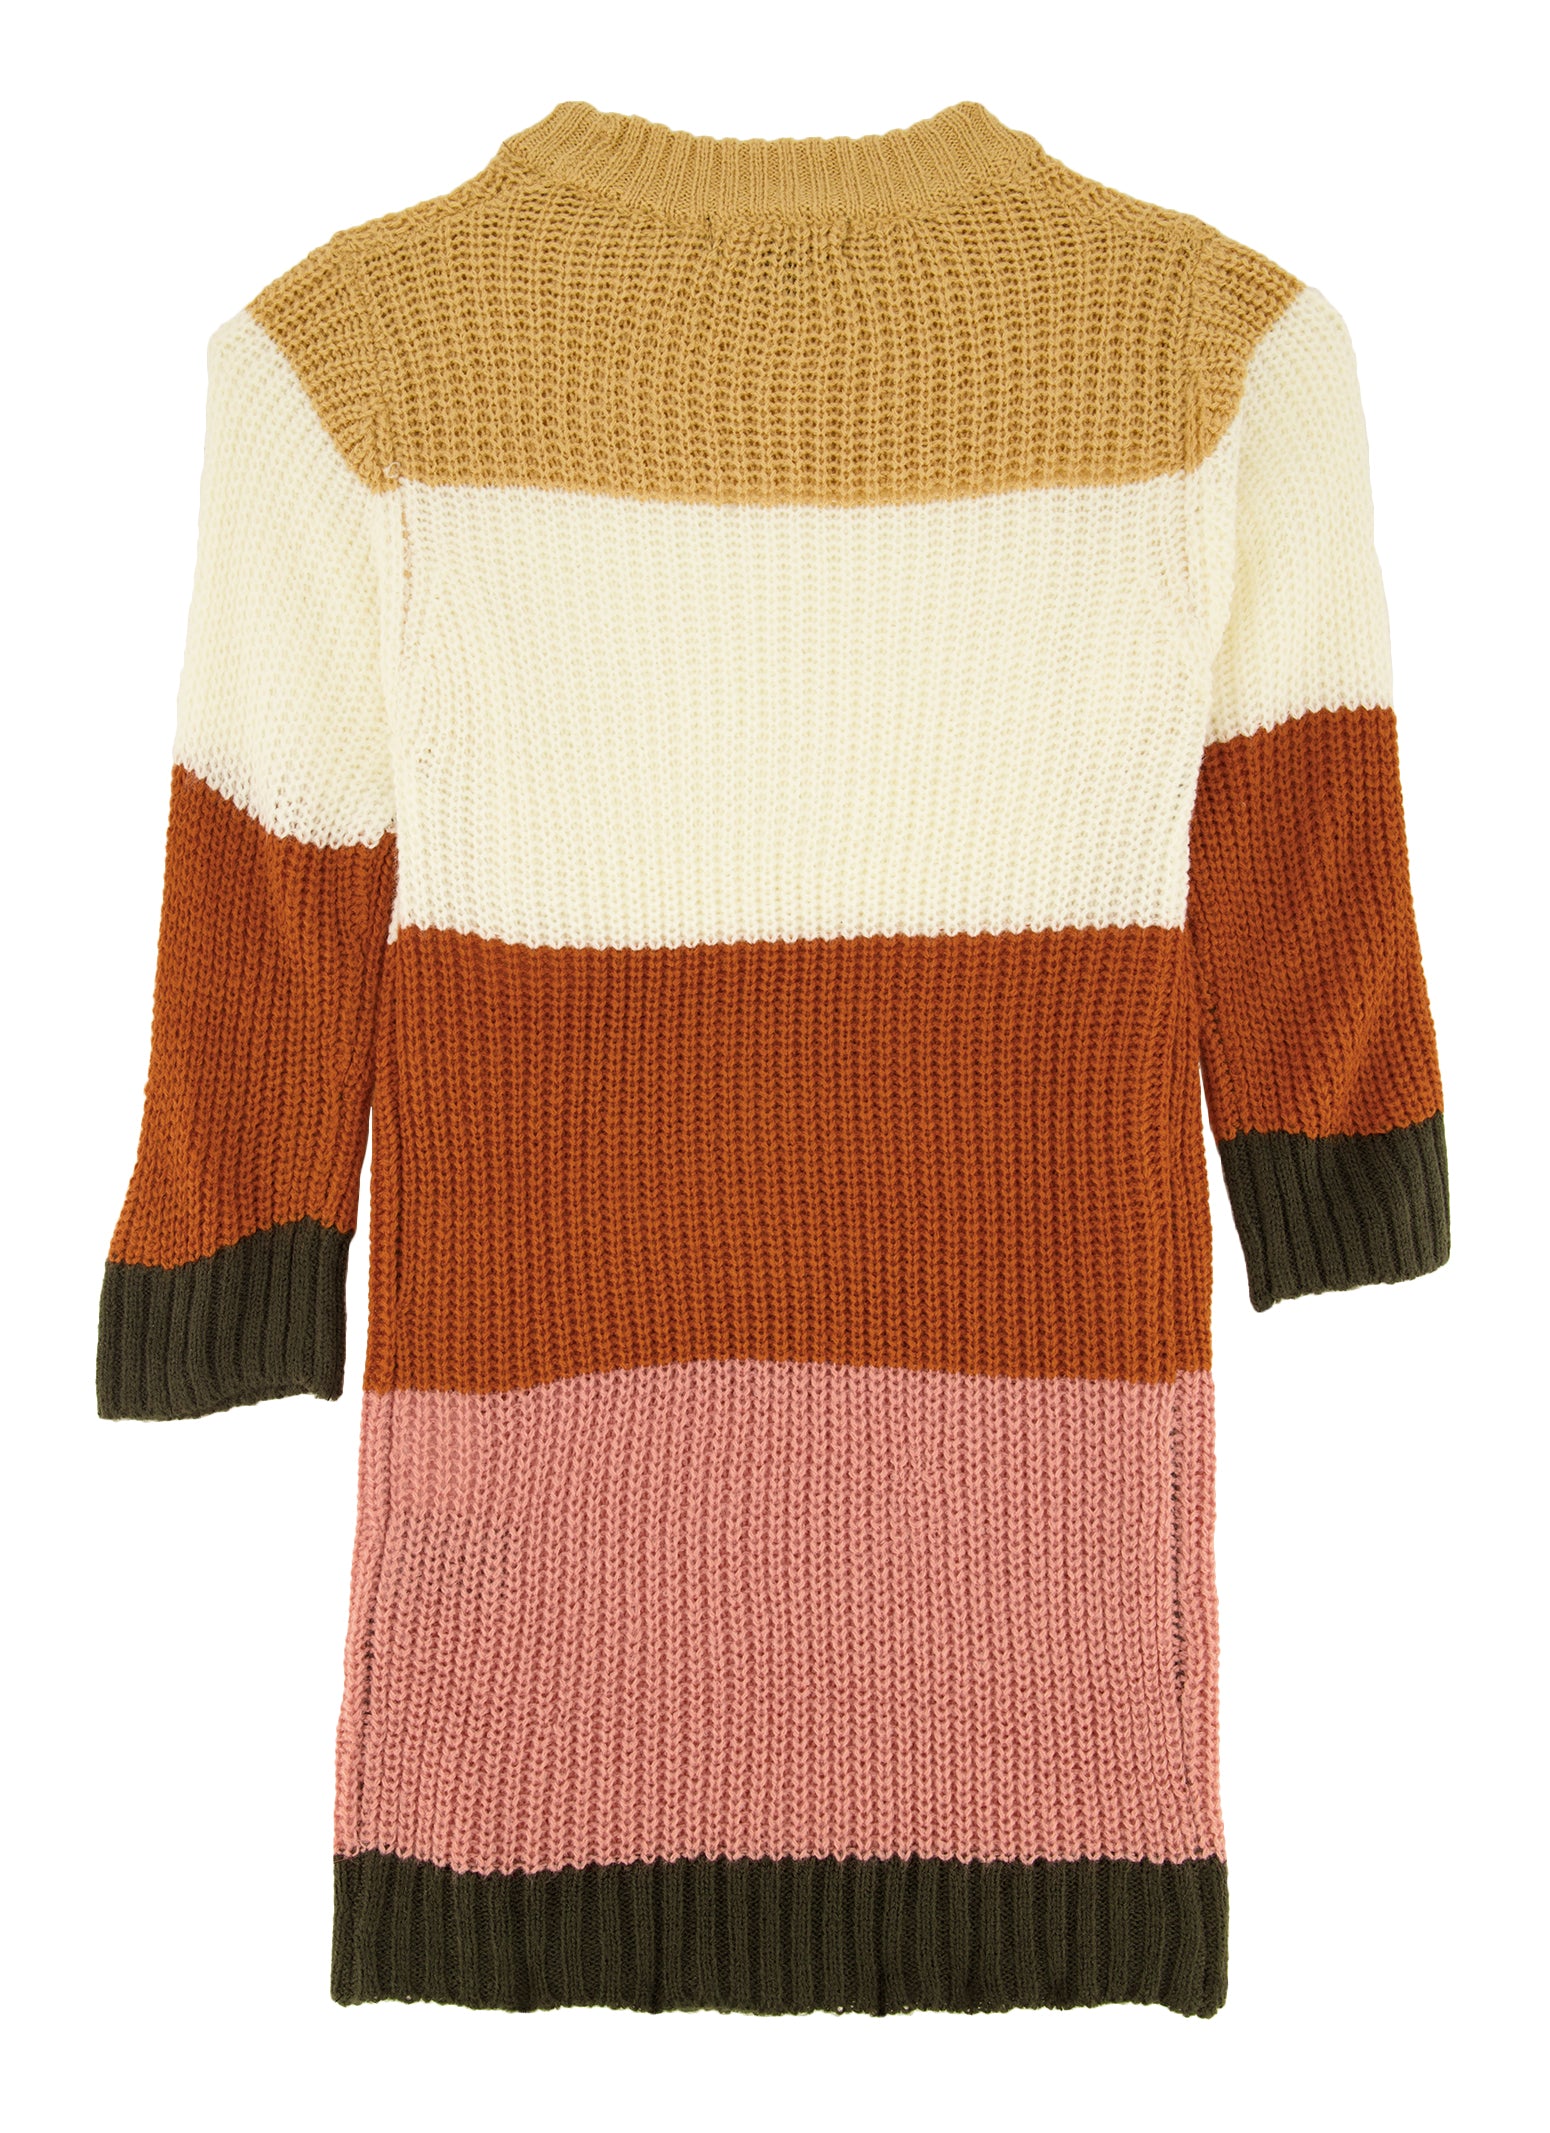 Toddler Girls Color Block Sweater Dress - Ivory